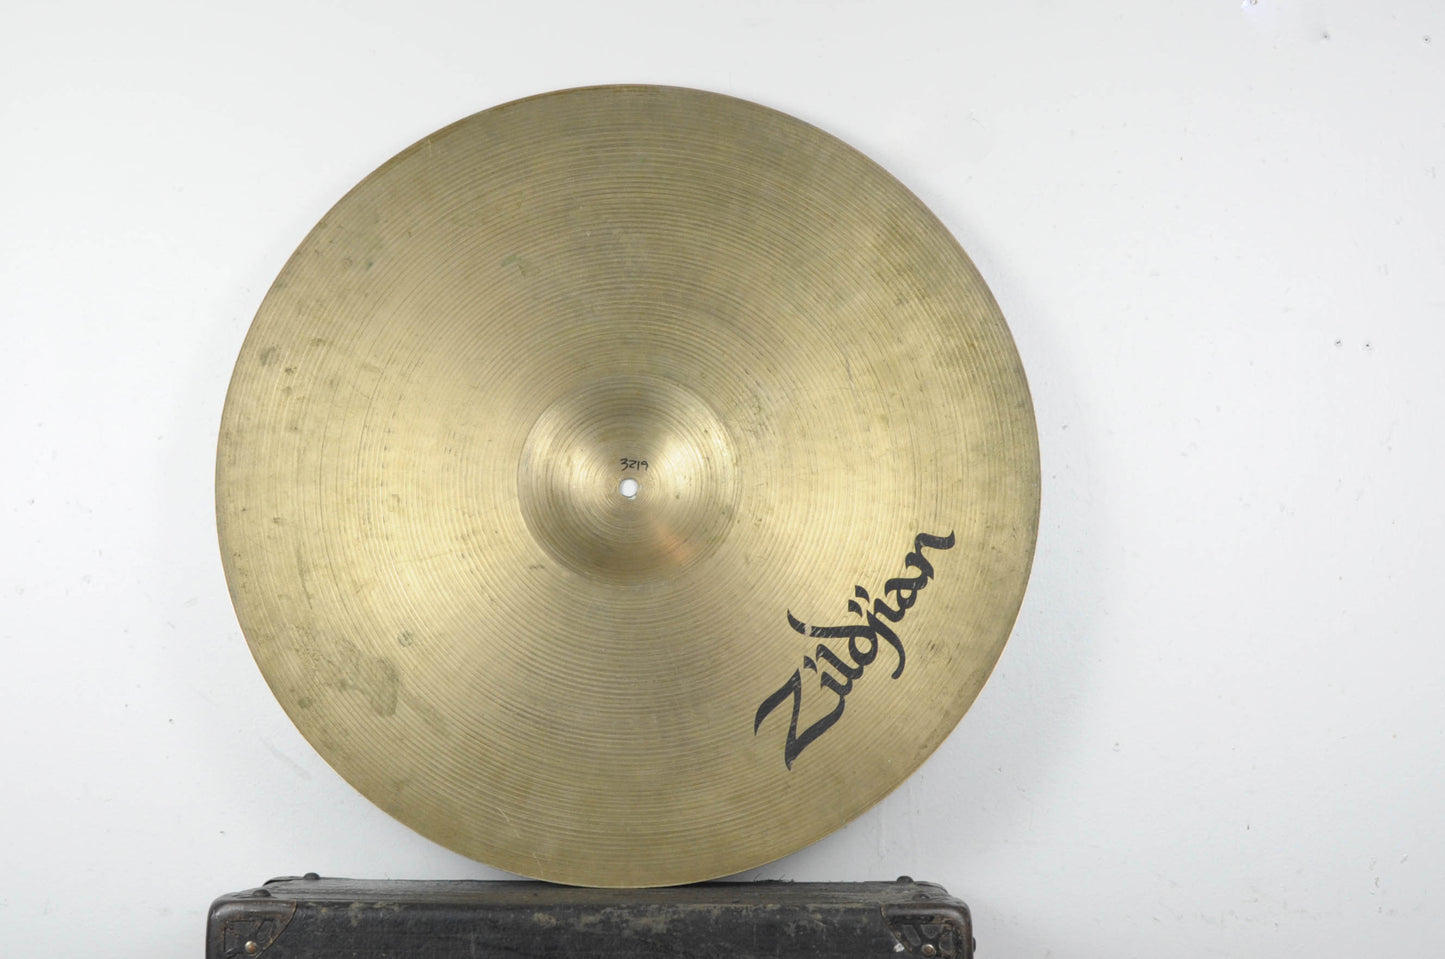 1990s Zildjian A 22" Medium Ride Cymbal 3219g